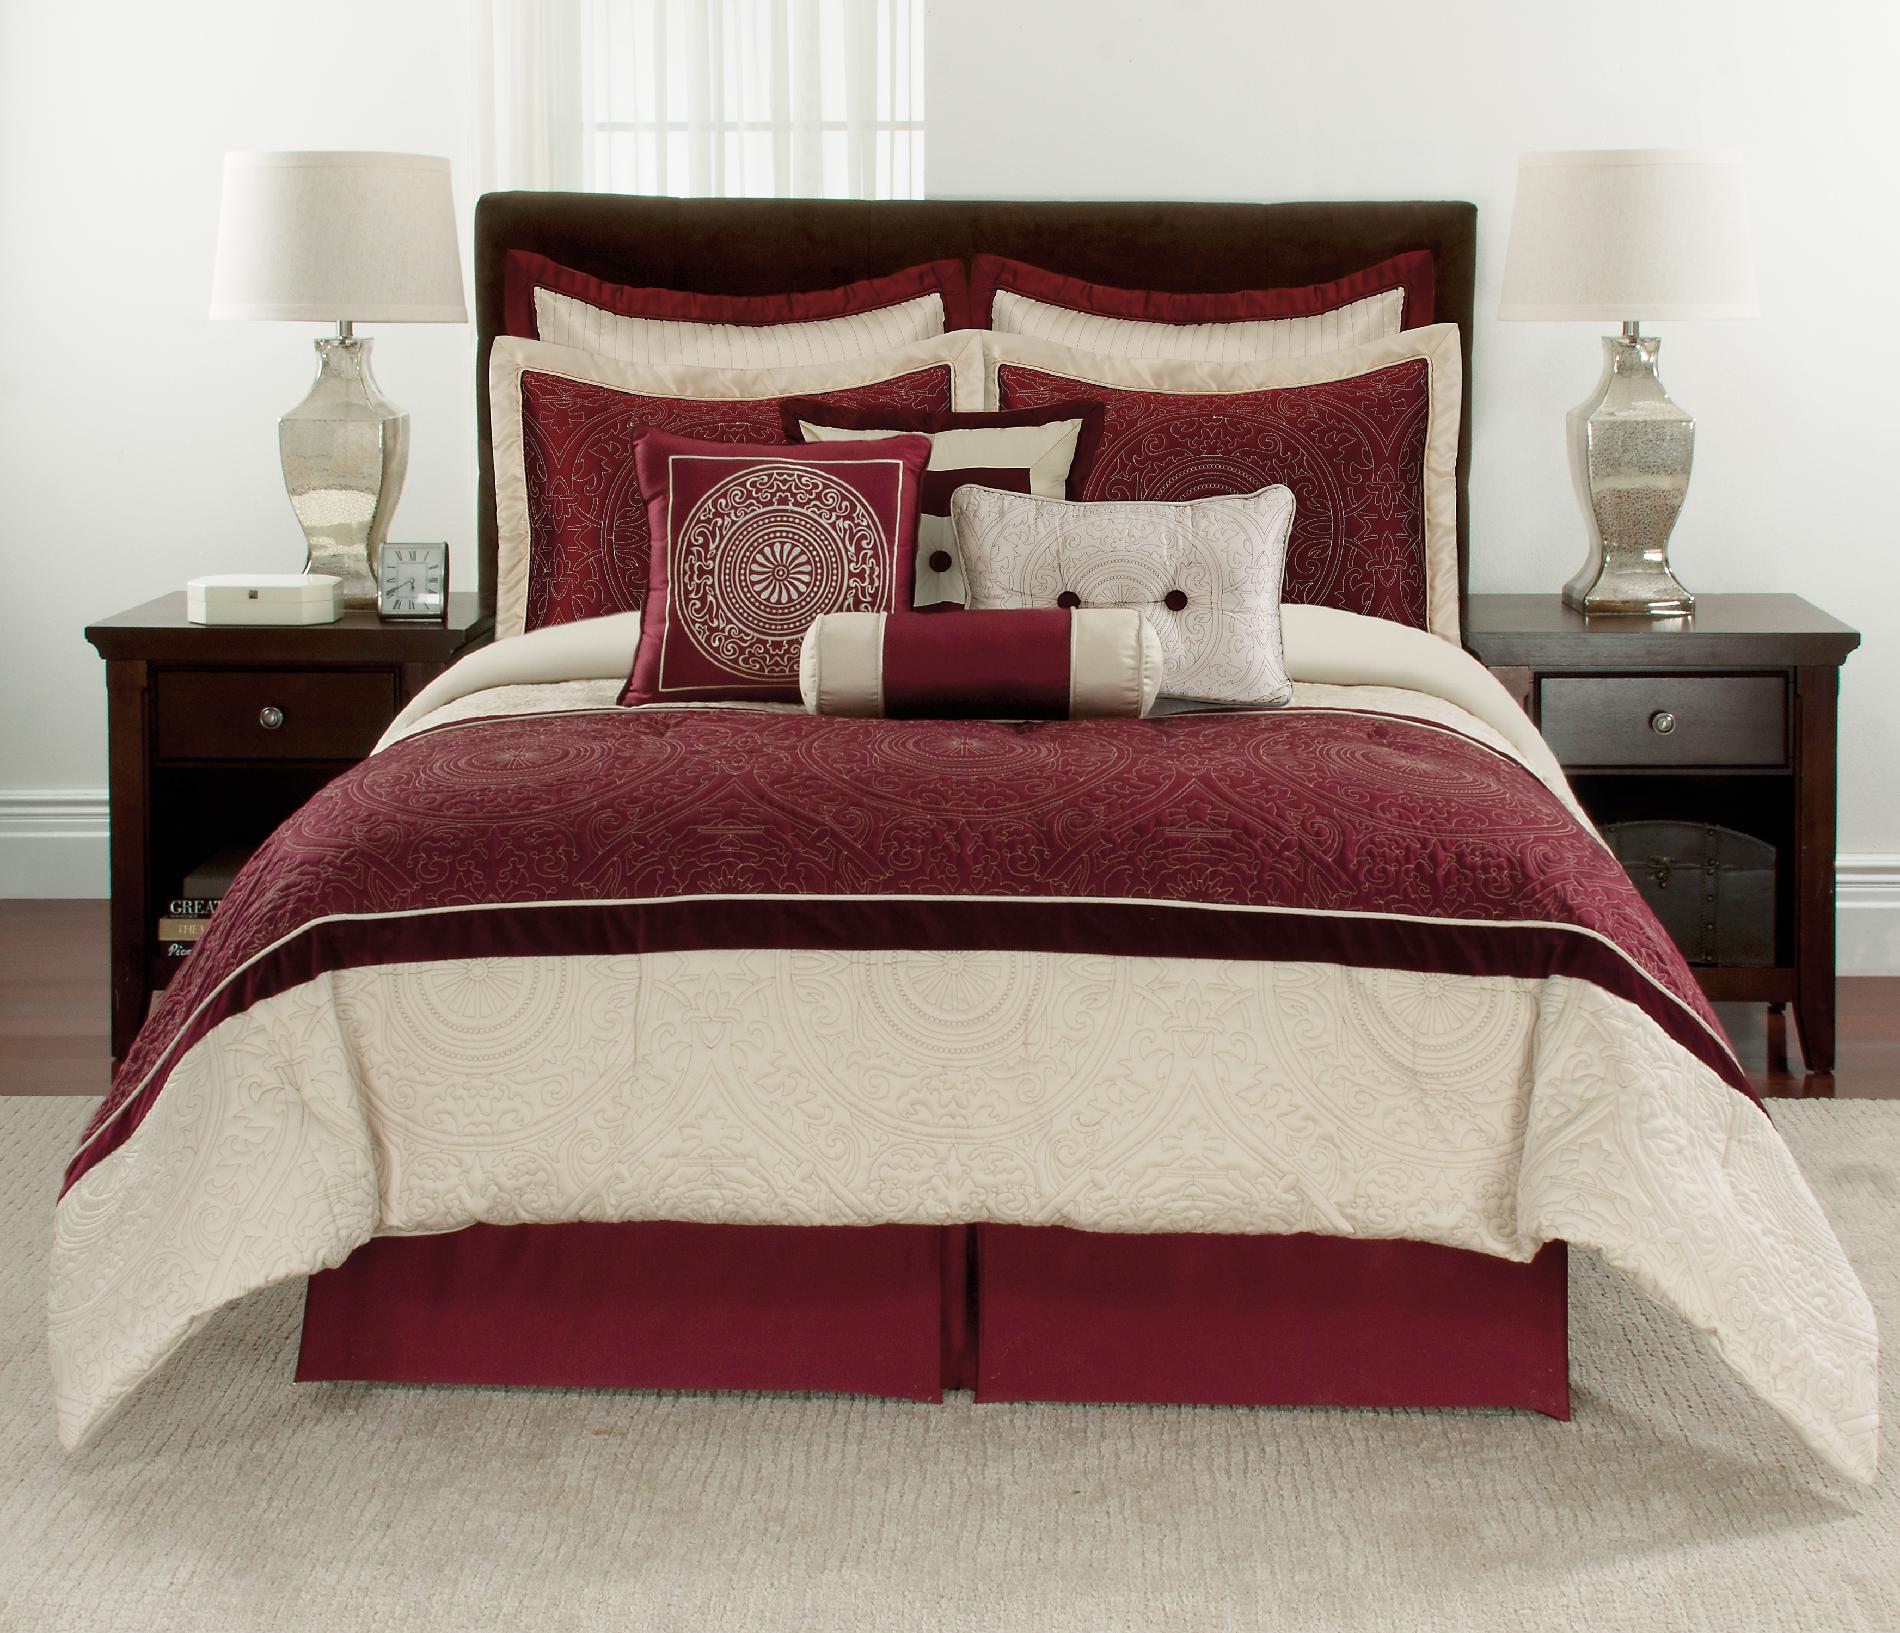 10 - Piece Comforter Set - Red